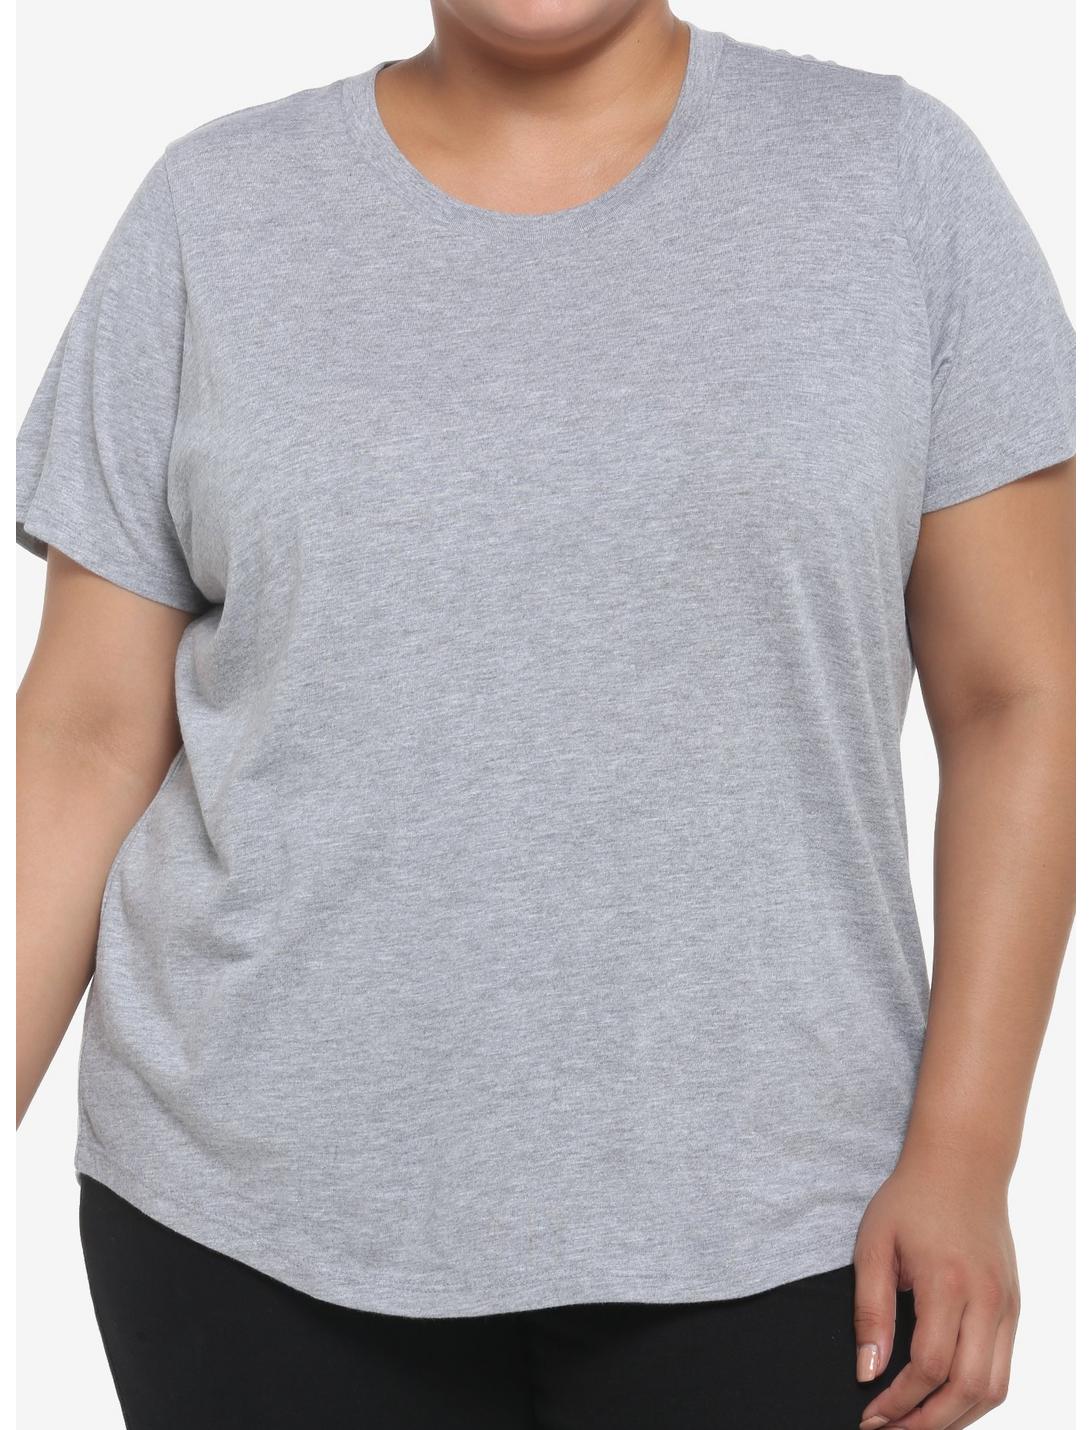 Her Universe Heather Grey Crewneck Favorite T-Shirt Plus Size, HEATHER GREY, hi-res